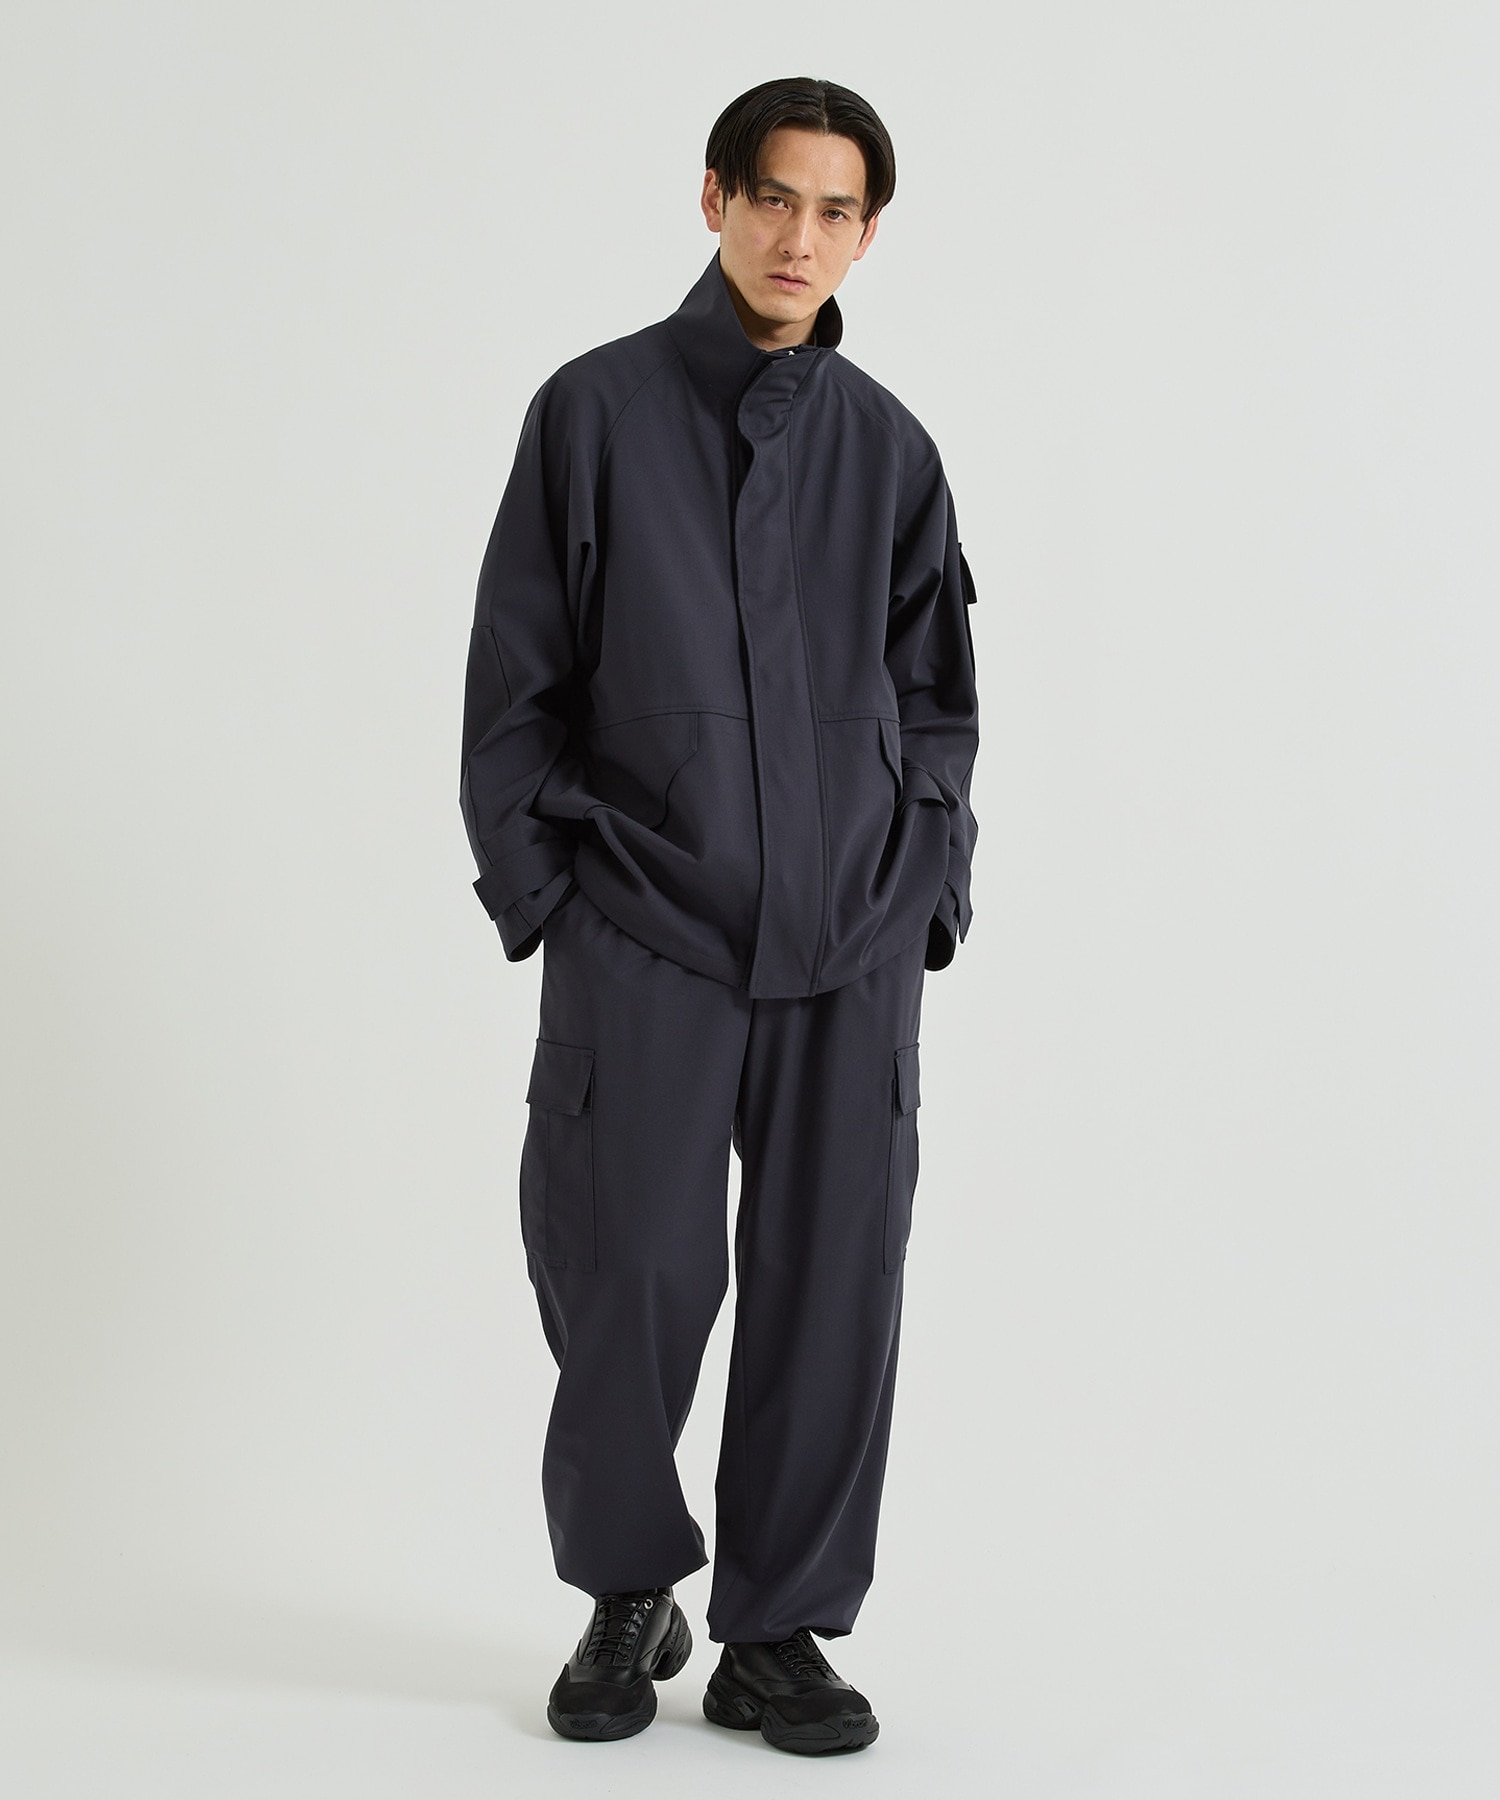 WTRK Wool Nylon Bonding Type ECWCS Jacket THE TOKYO